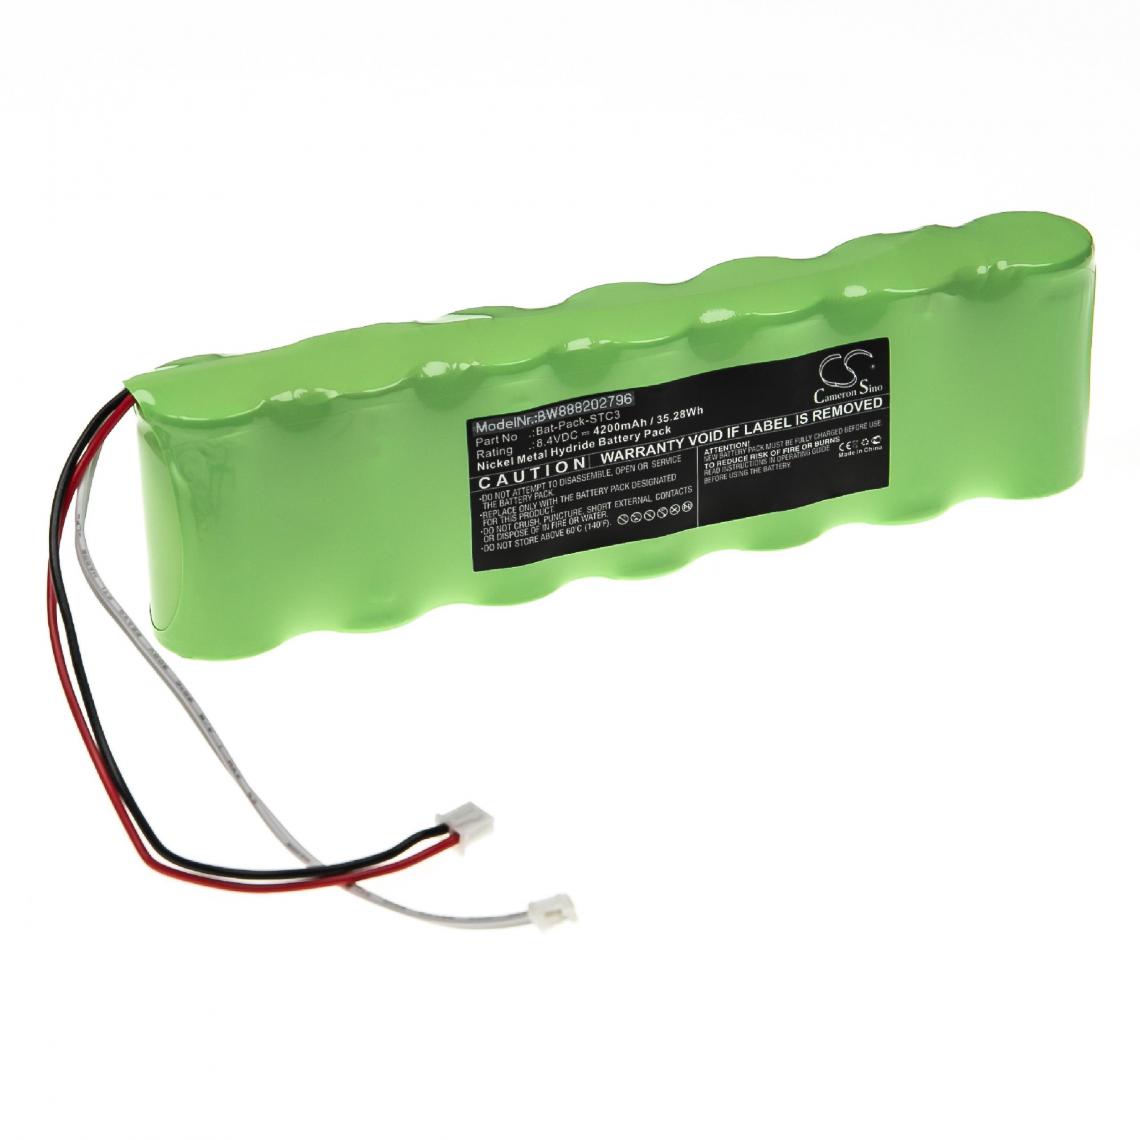 Vhbw - vhbw Batterie compatible avec Rover Omnia 9 outil de mesure (4200mAh, 8,4V, NiMH) - Piles rechargeables